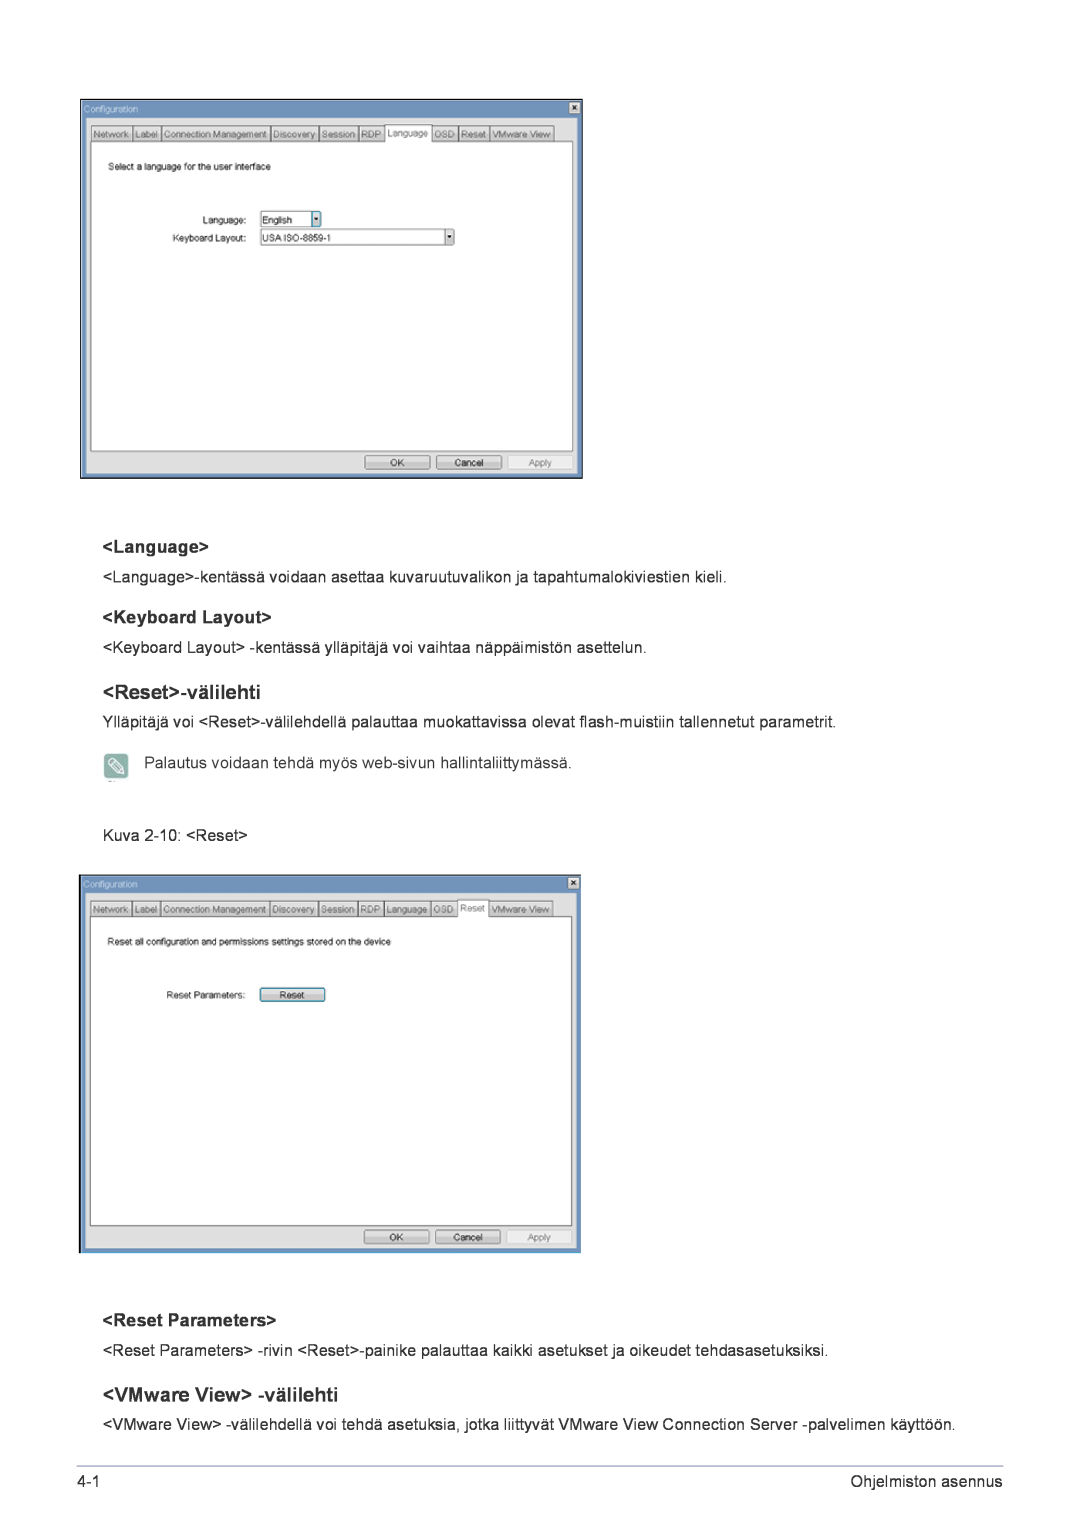 Samsung LF22NPBHBNP/EN manual Reset-välilehti, VMware View -välilehti, Language, Keyboard Layout, Reset Parameters 